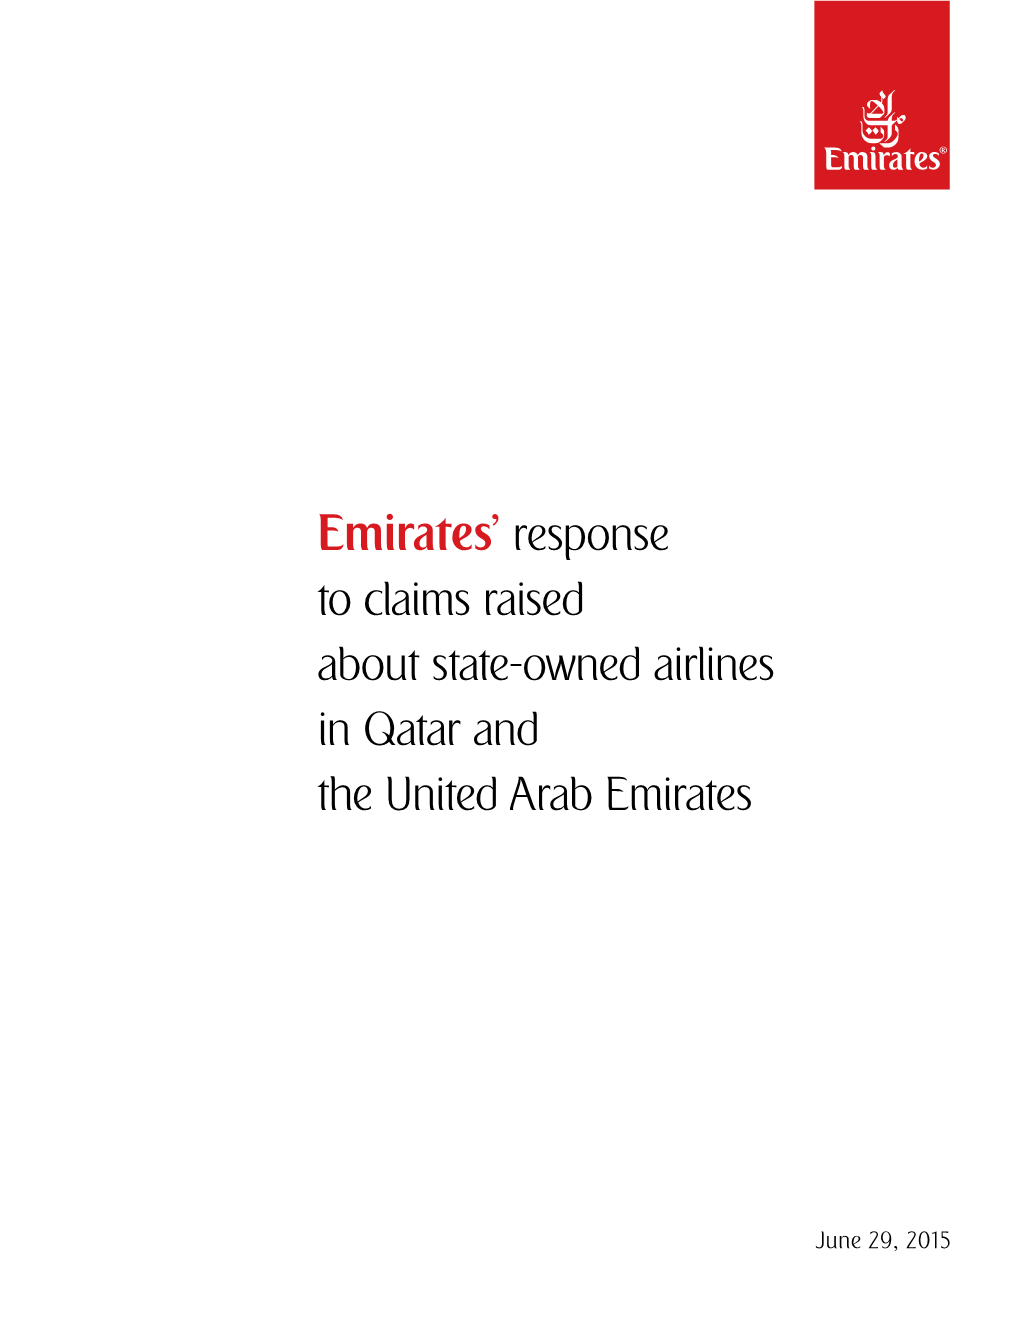 Emirates' Response